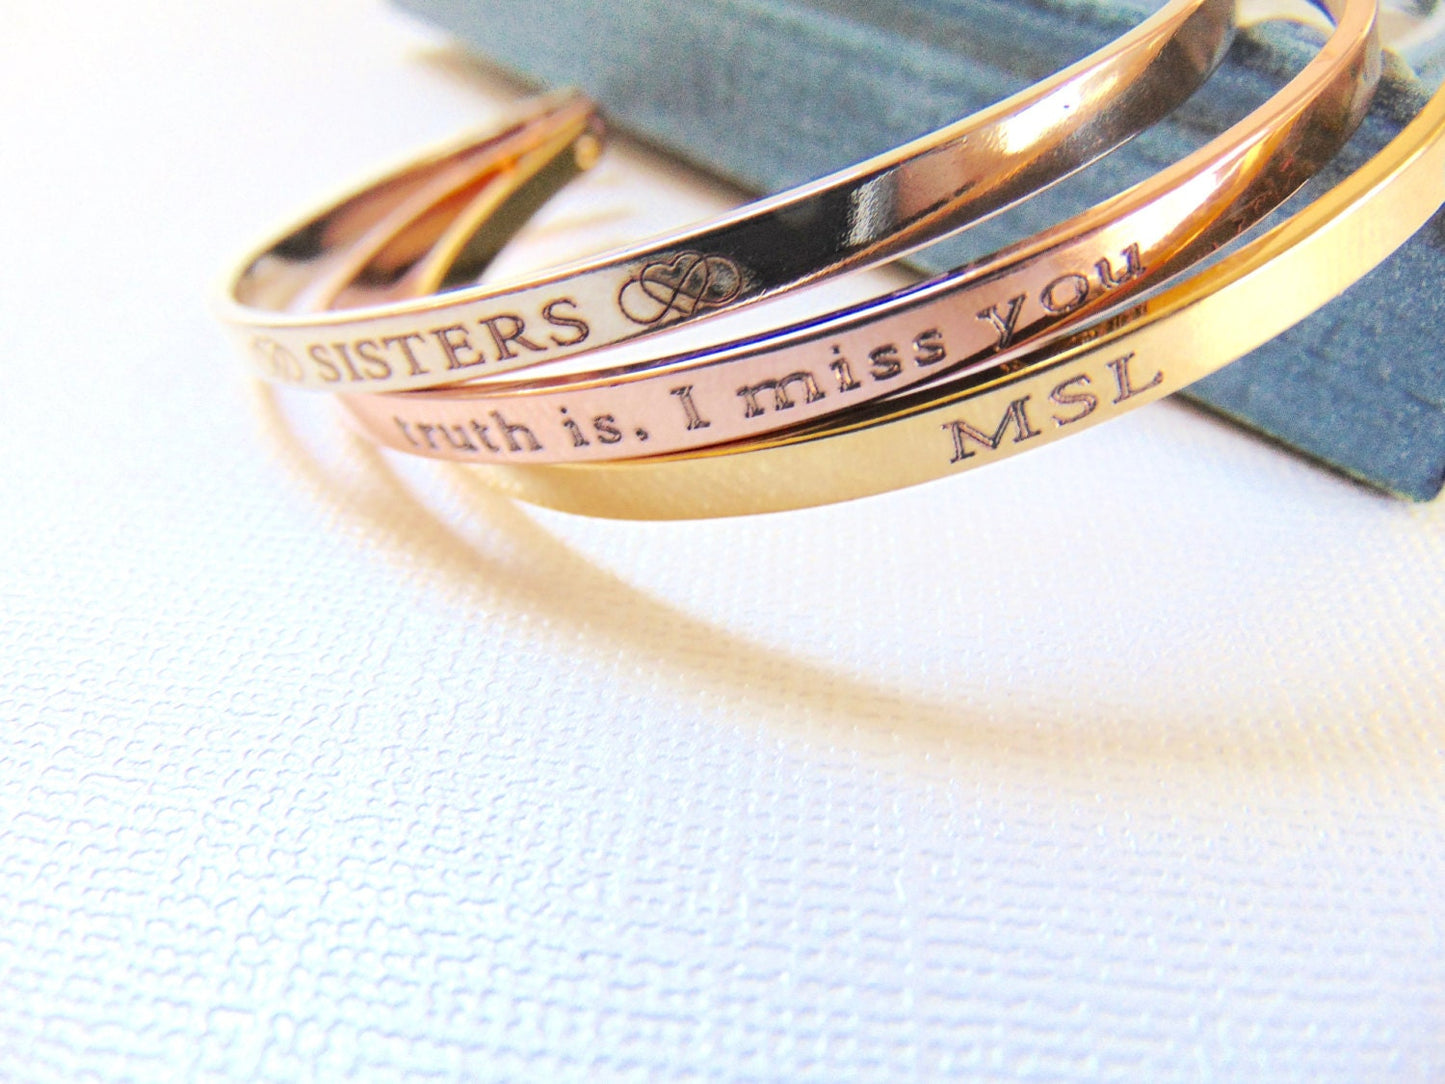 Custom engraved message on Gold/Rose Gold/Silver Cuff Bracelet